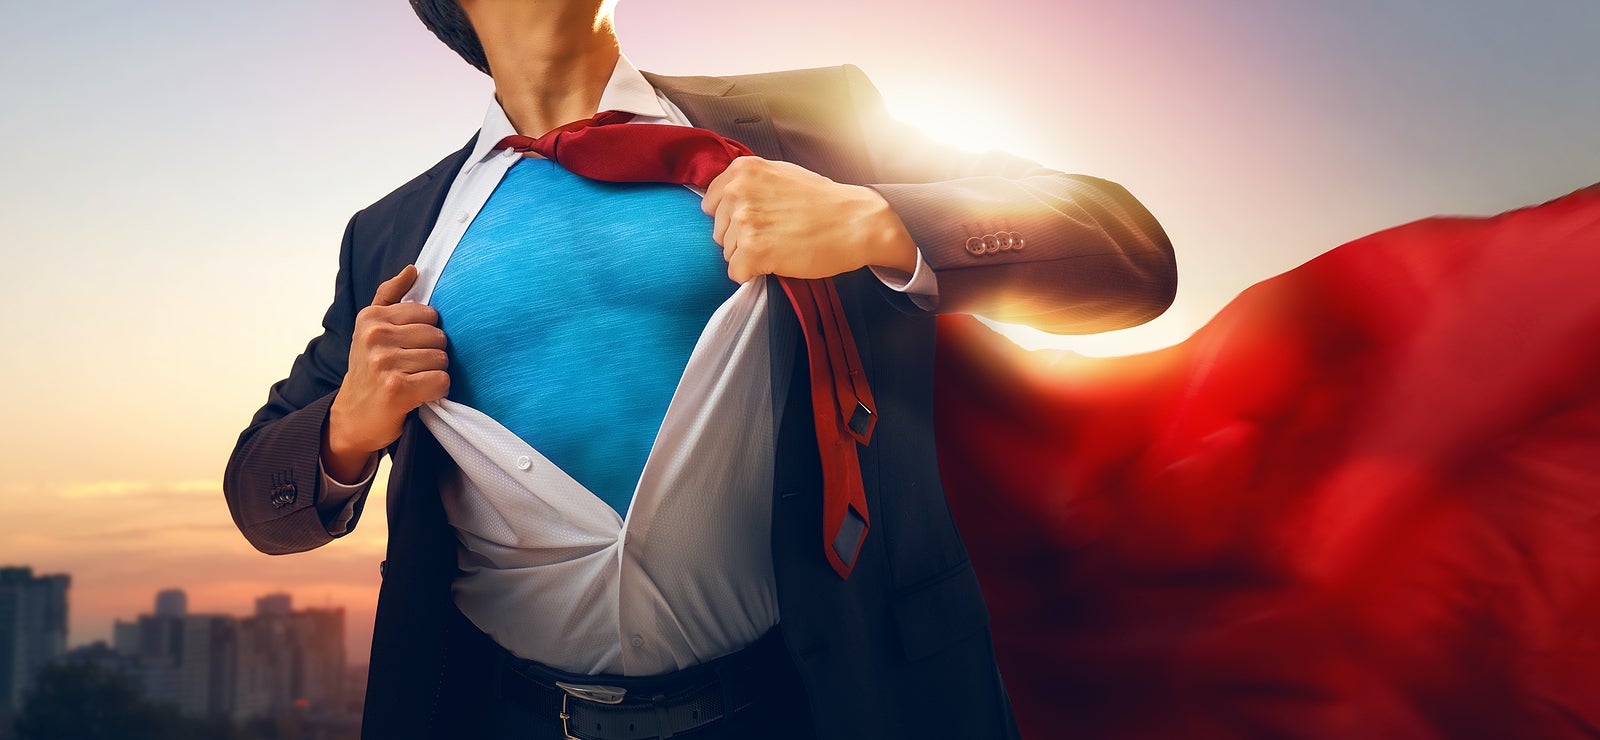 4 Ways to Become a Business Superhero